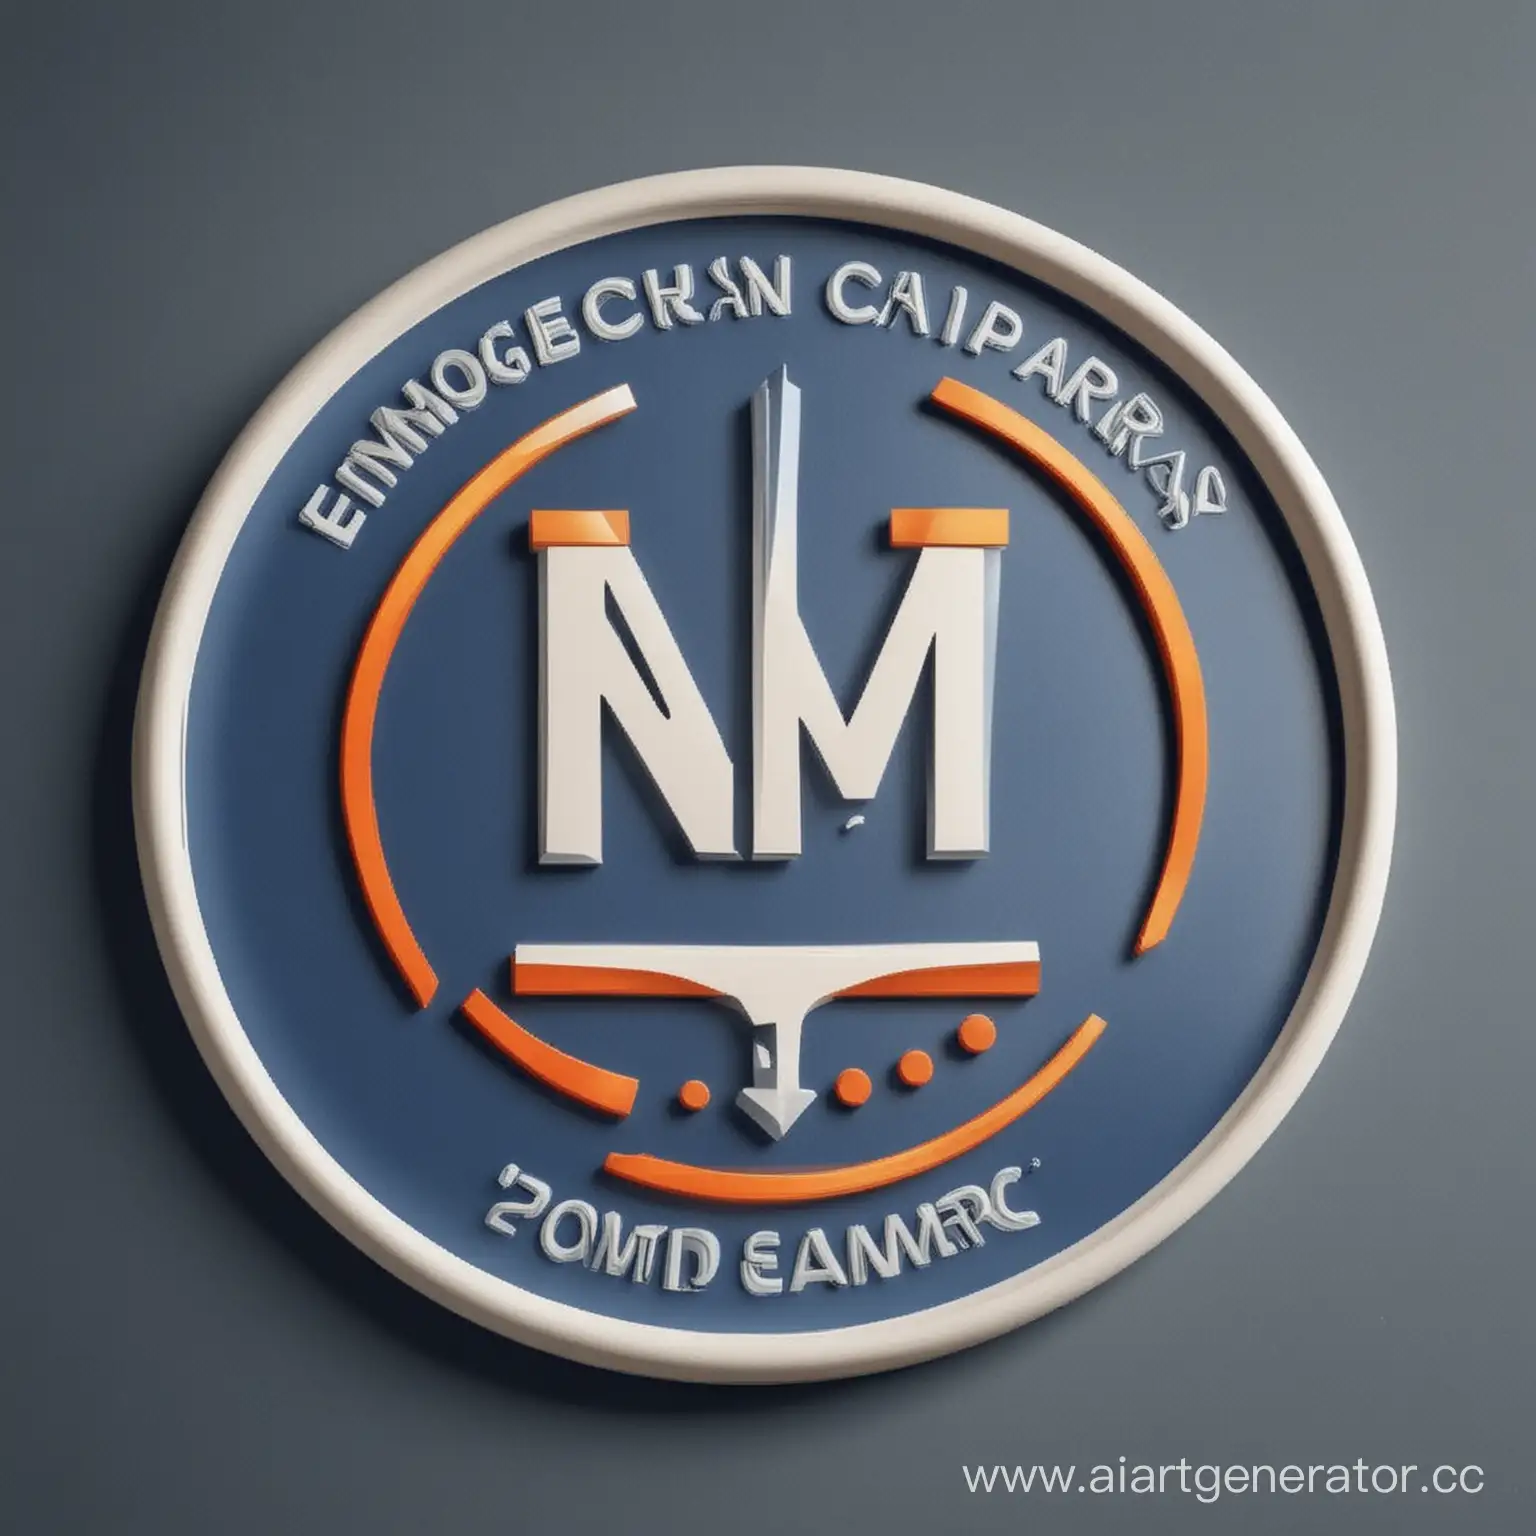 Circular-Energy-Company-Logo-with-Name